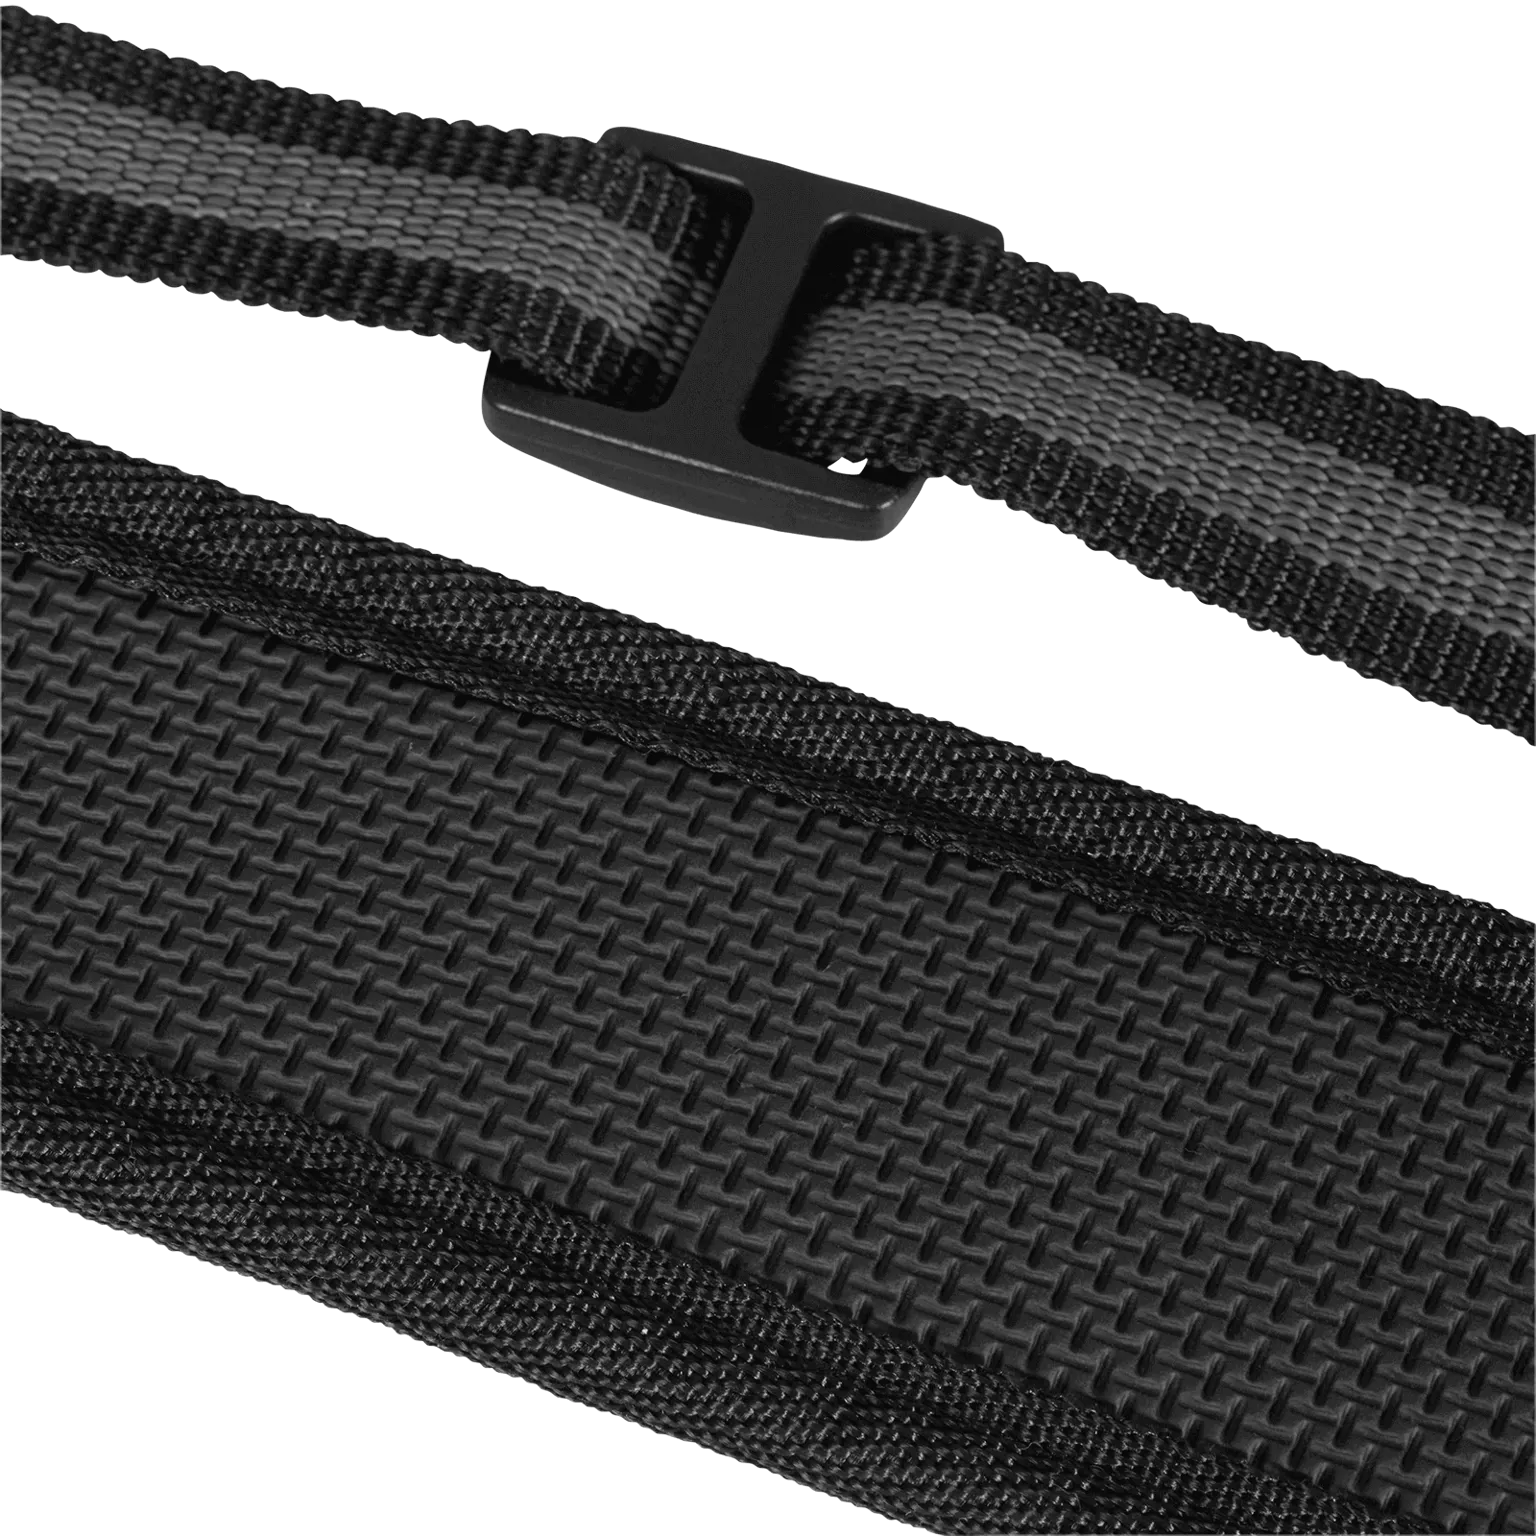 Aimpoint® Rifle sling Orange - Adjustable length  - 4